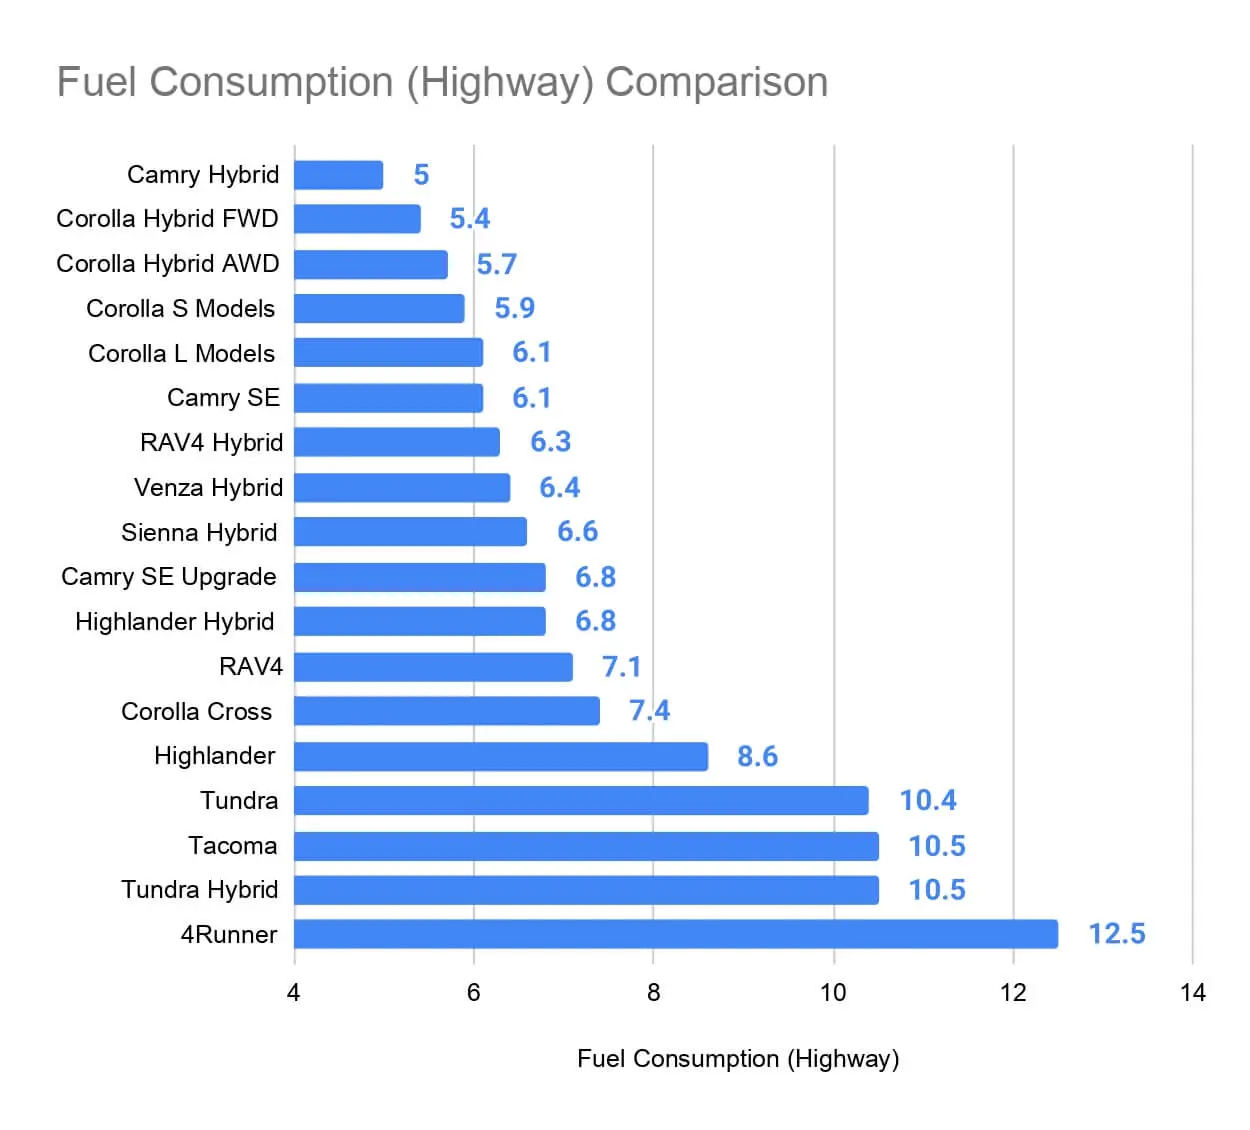 Toyota Fuel Consumption Comparison (Highway)